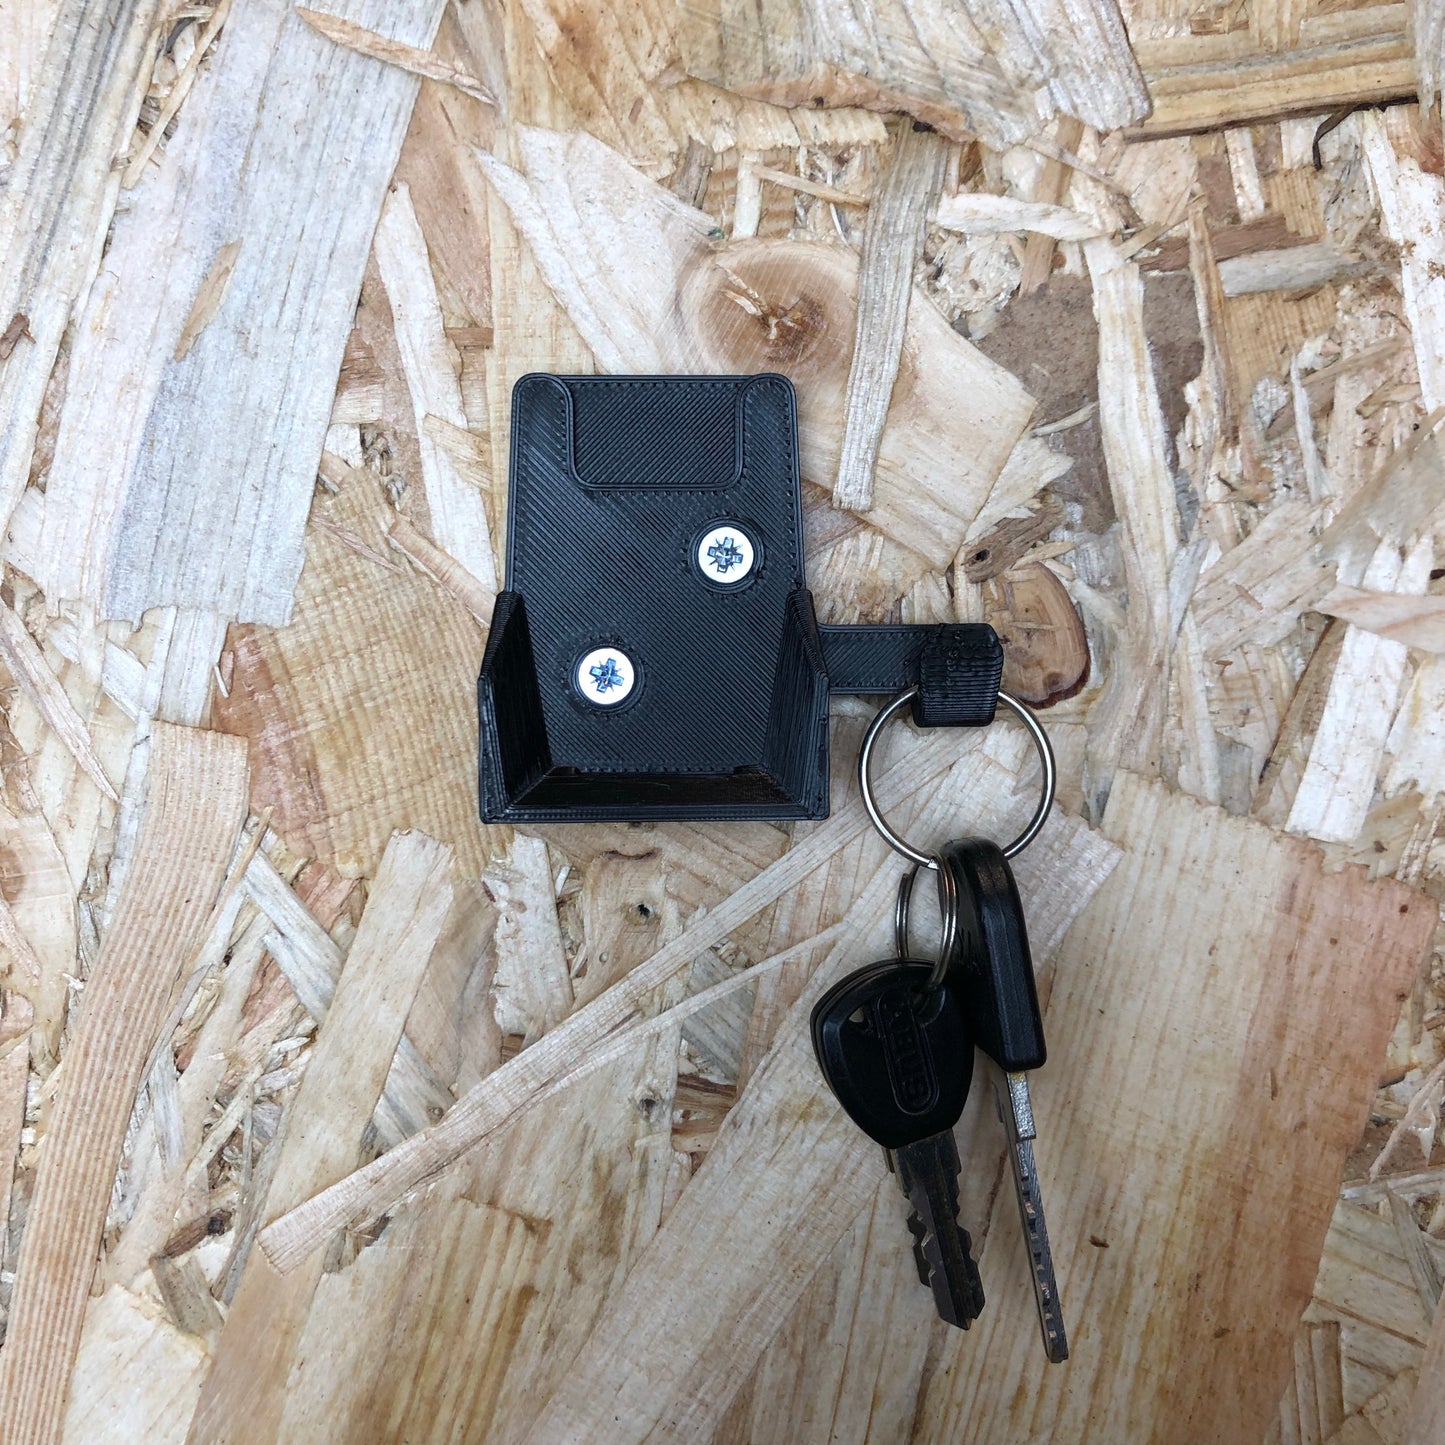 Bosch Kiox display & key holder (magnetic)